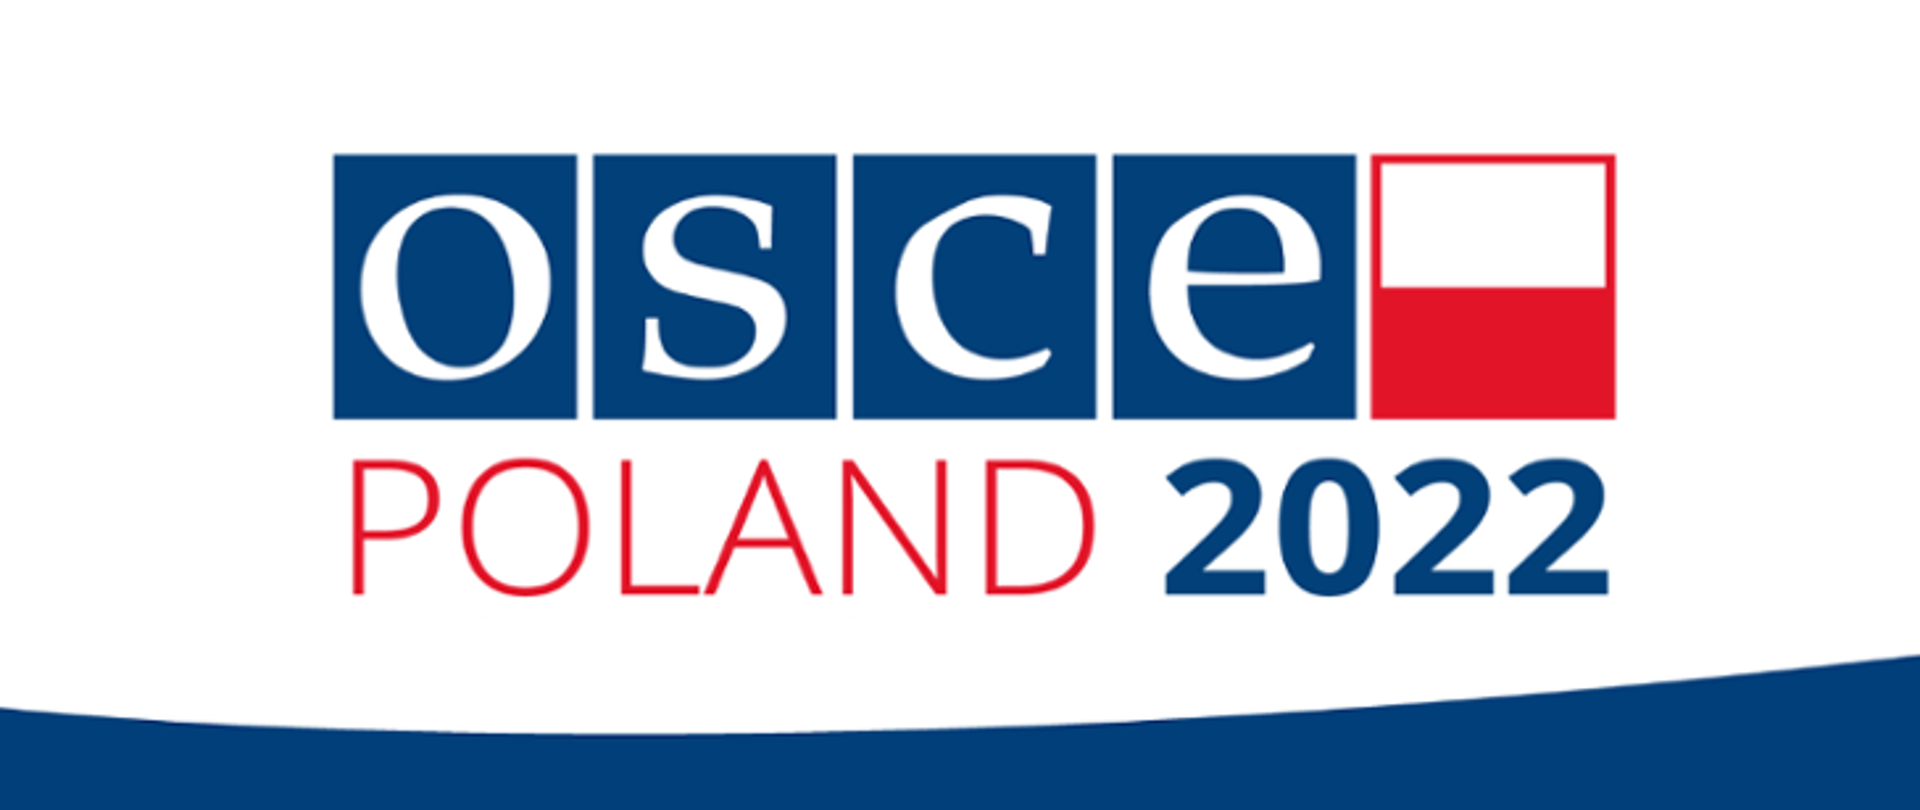 OSCE Chairmanship 2022